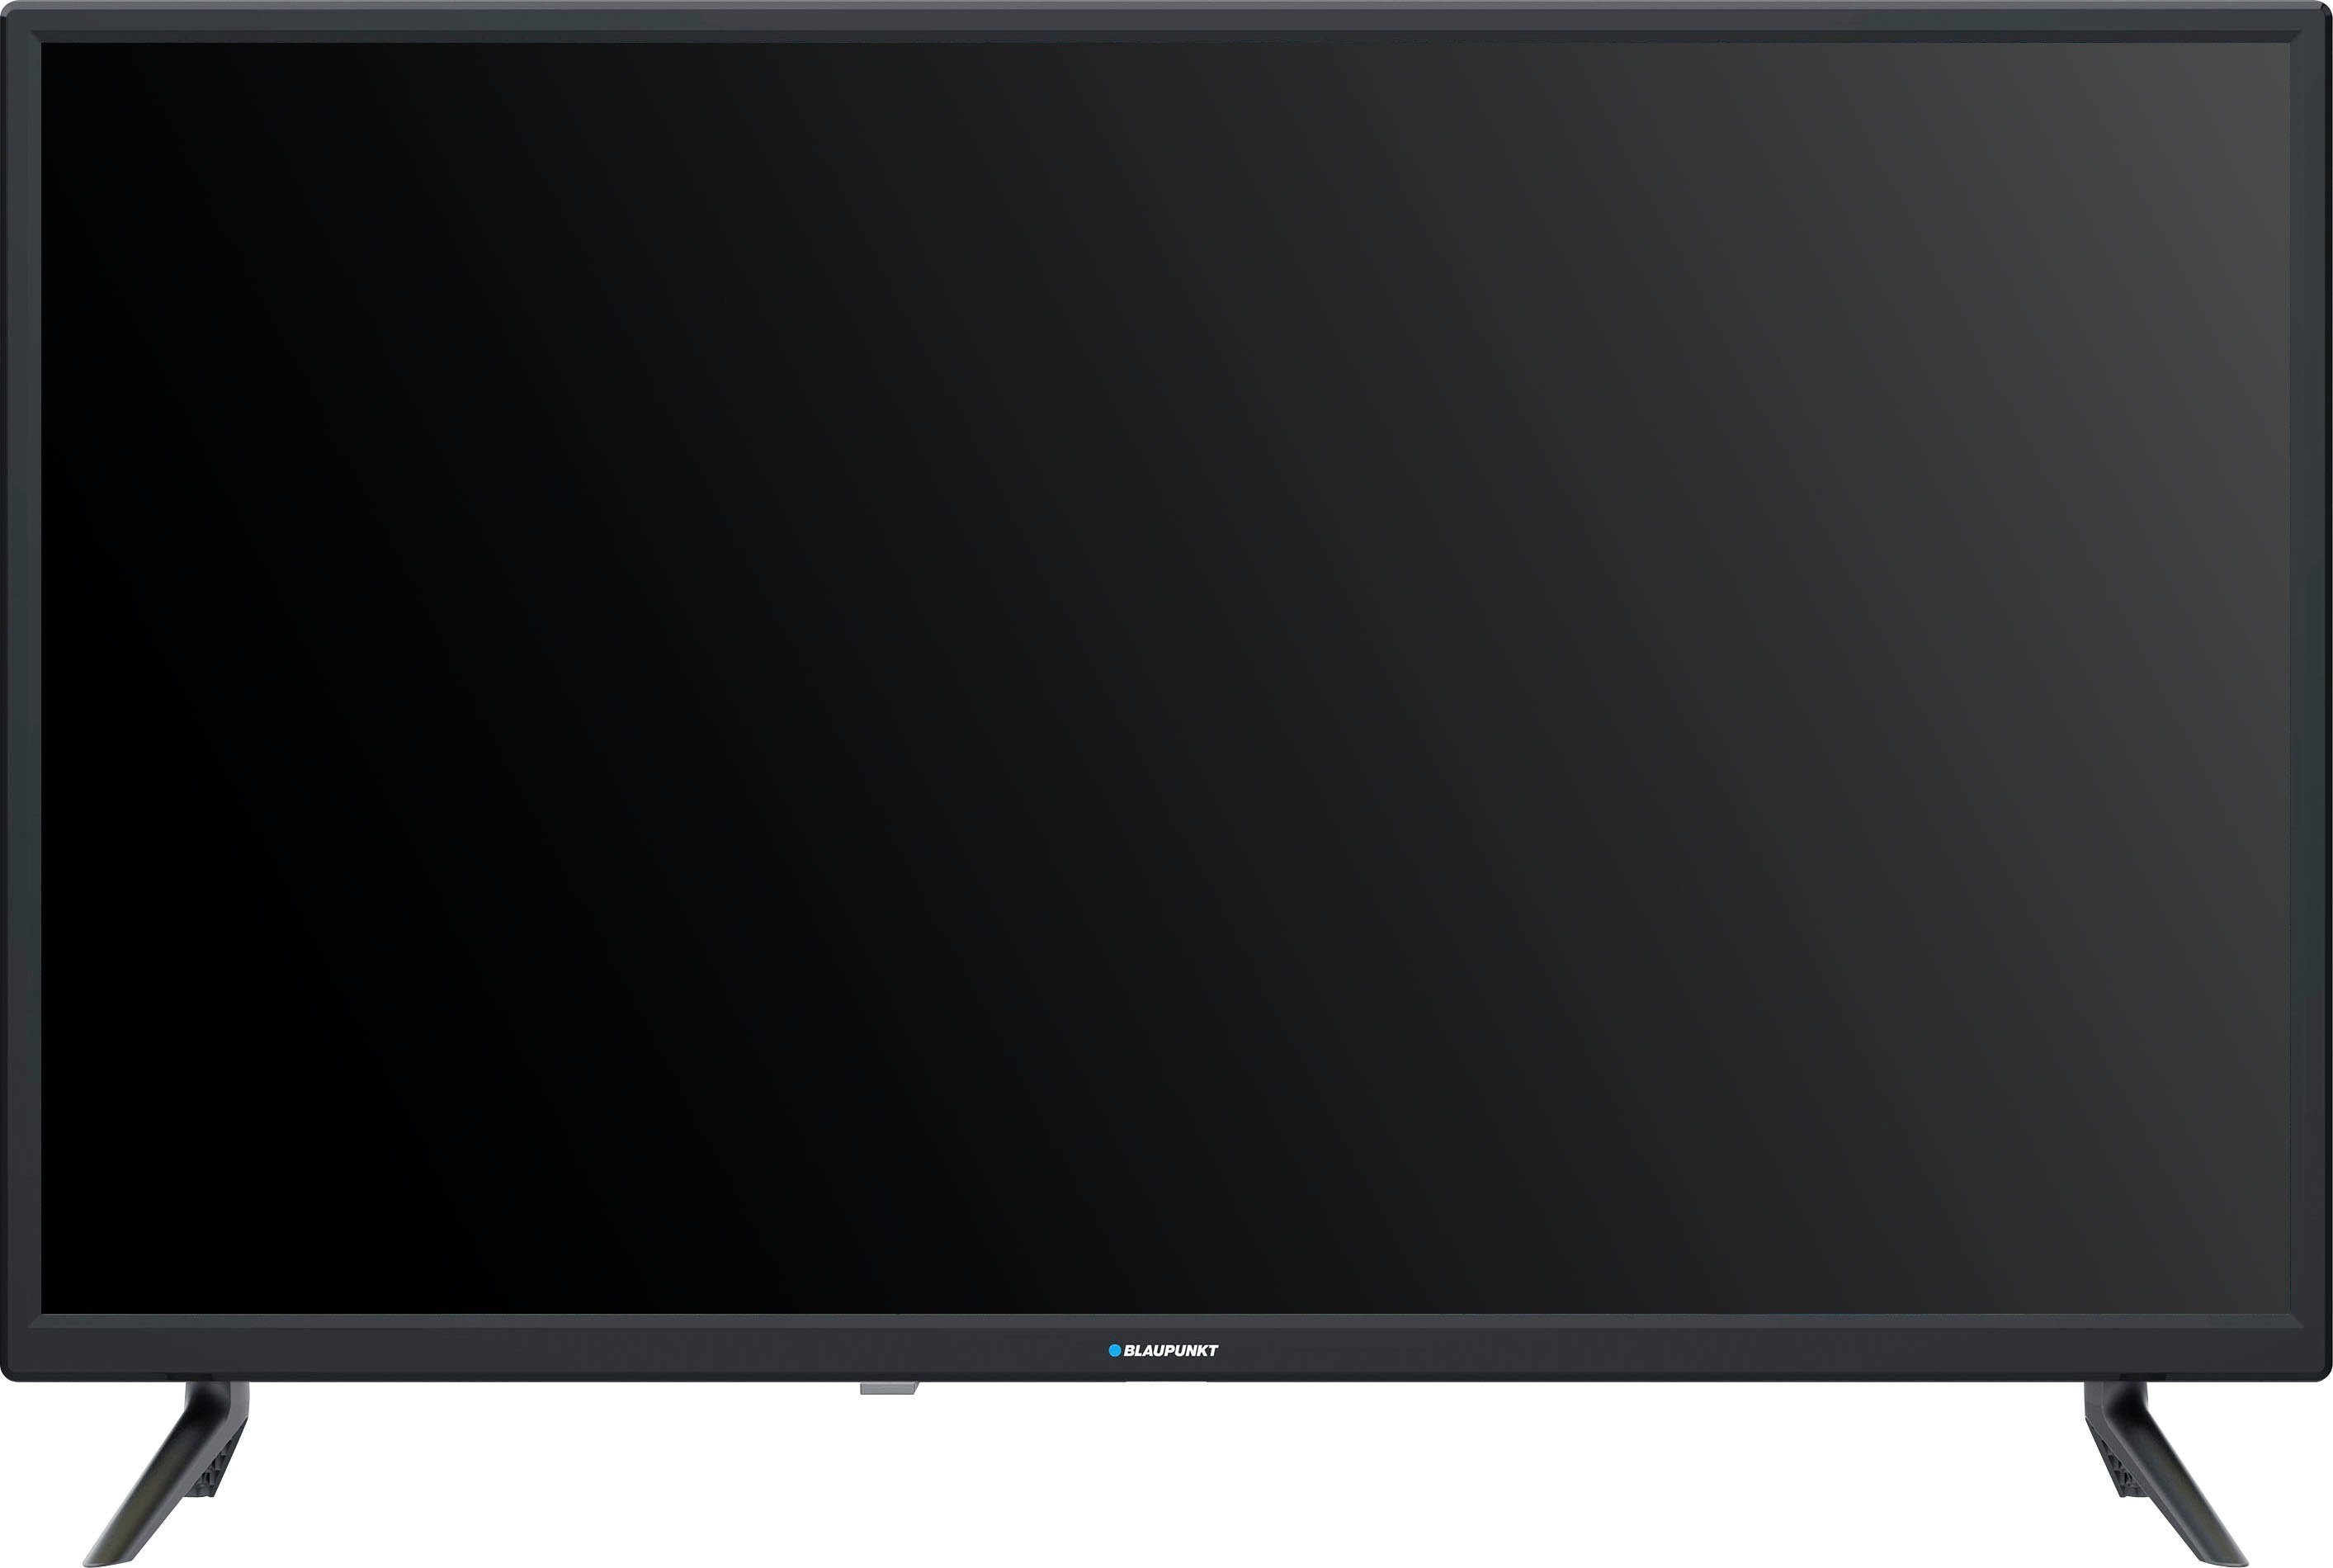 Blaupunkt 32H1372x LED-Fernseher (80 cm/32 Zoll, HD, 3x HDMI, 2x USB,  DVB-T/C/S2-Anschluss, USB Media-Player)